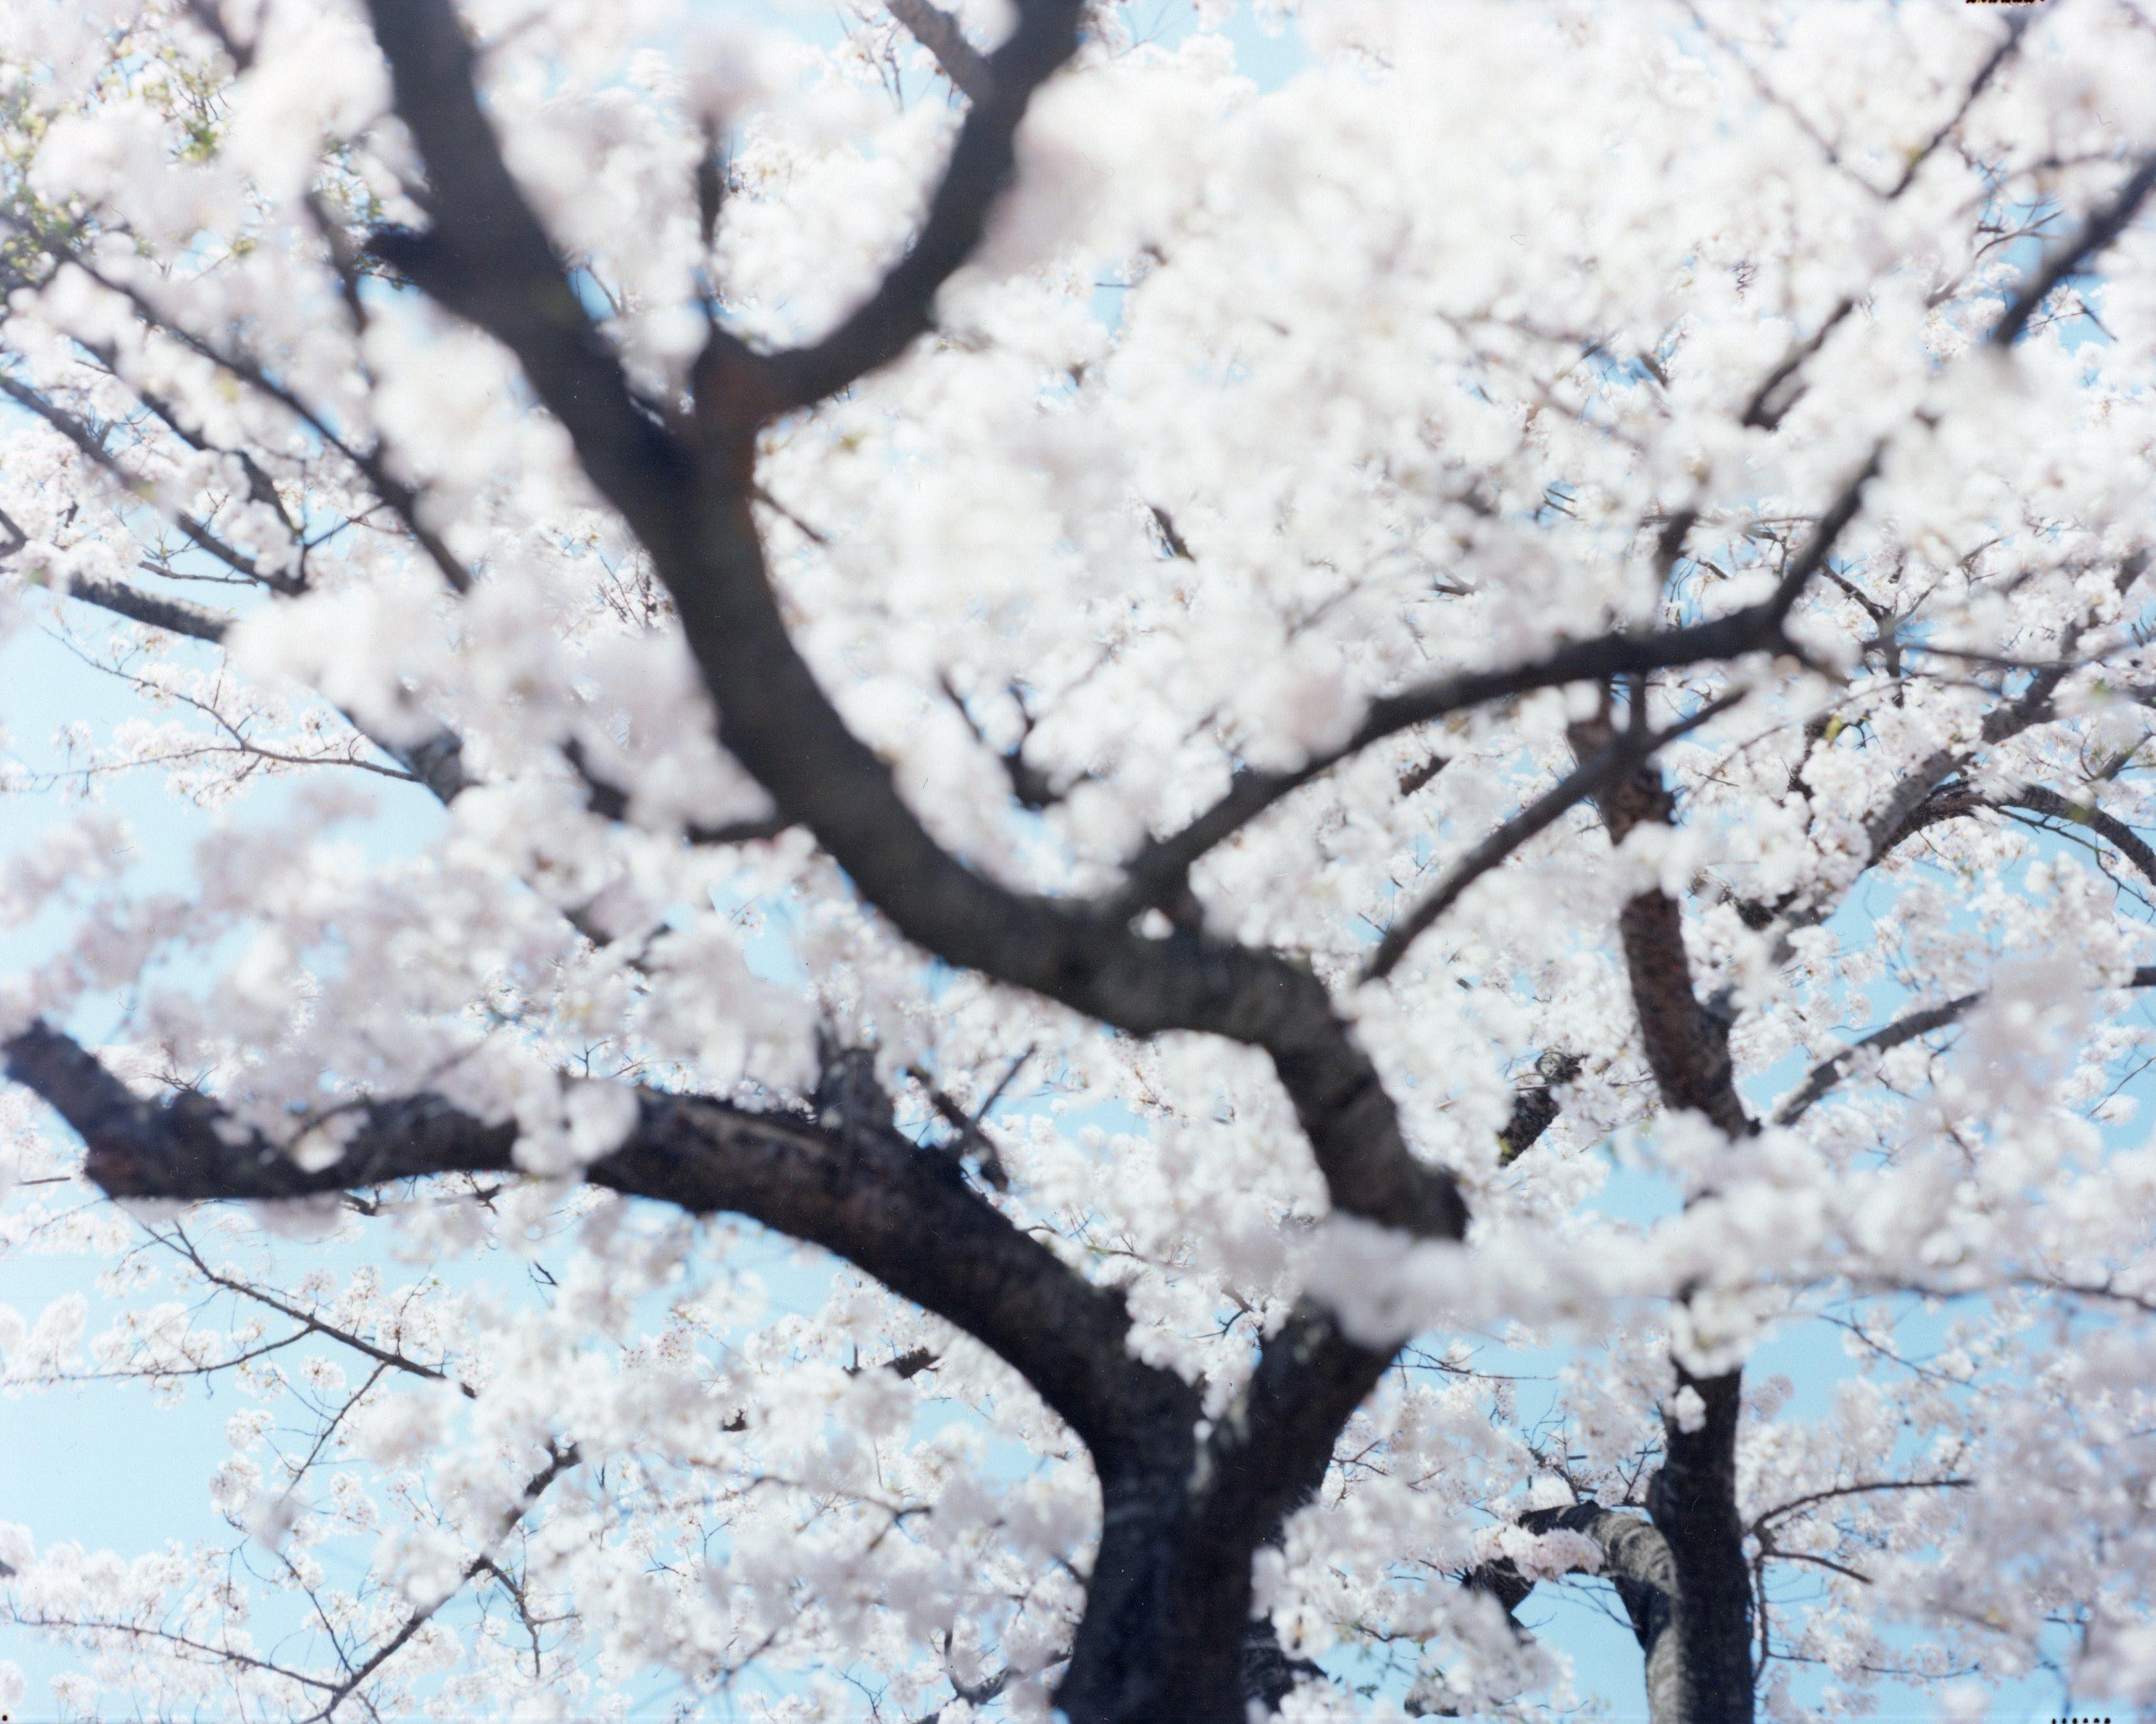 SAKURA 21, 4-585 - Risaku Suzuki, Natur, Frühling, Kirschblüte, Sakura, Japan